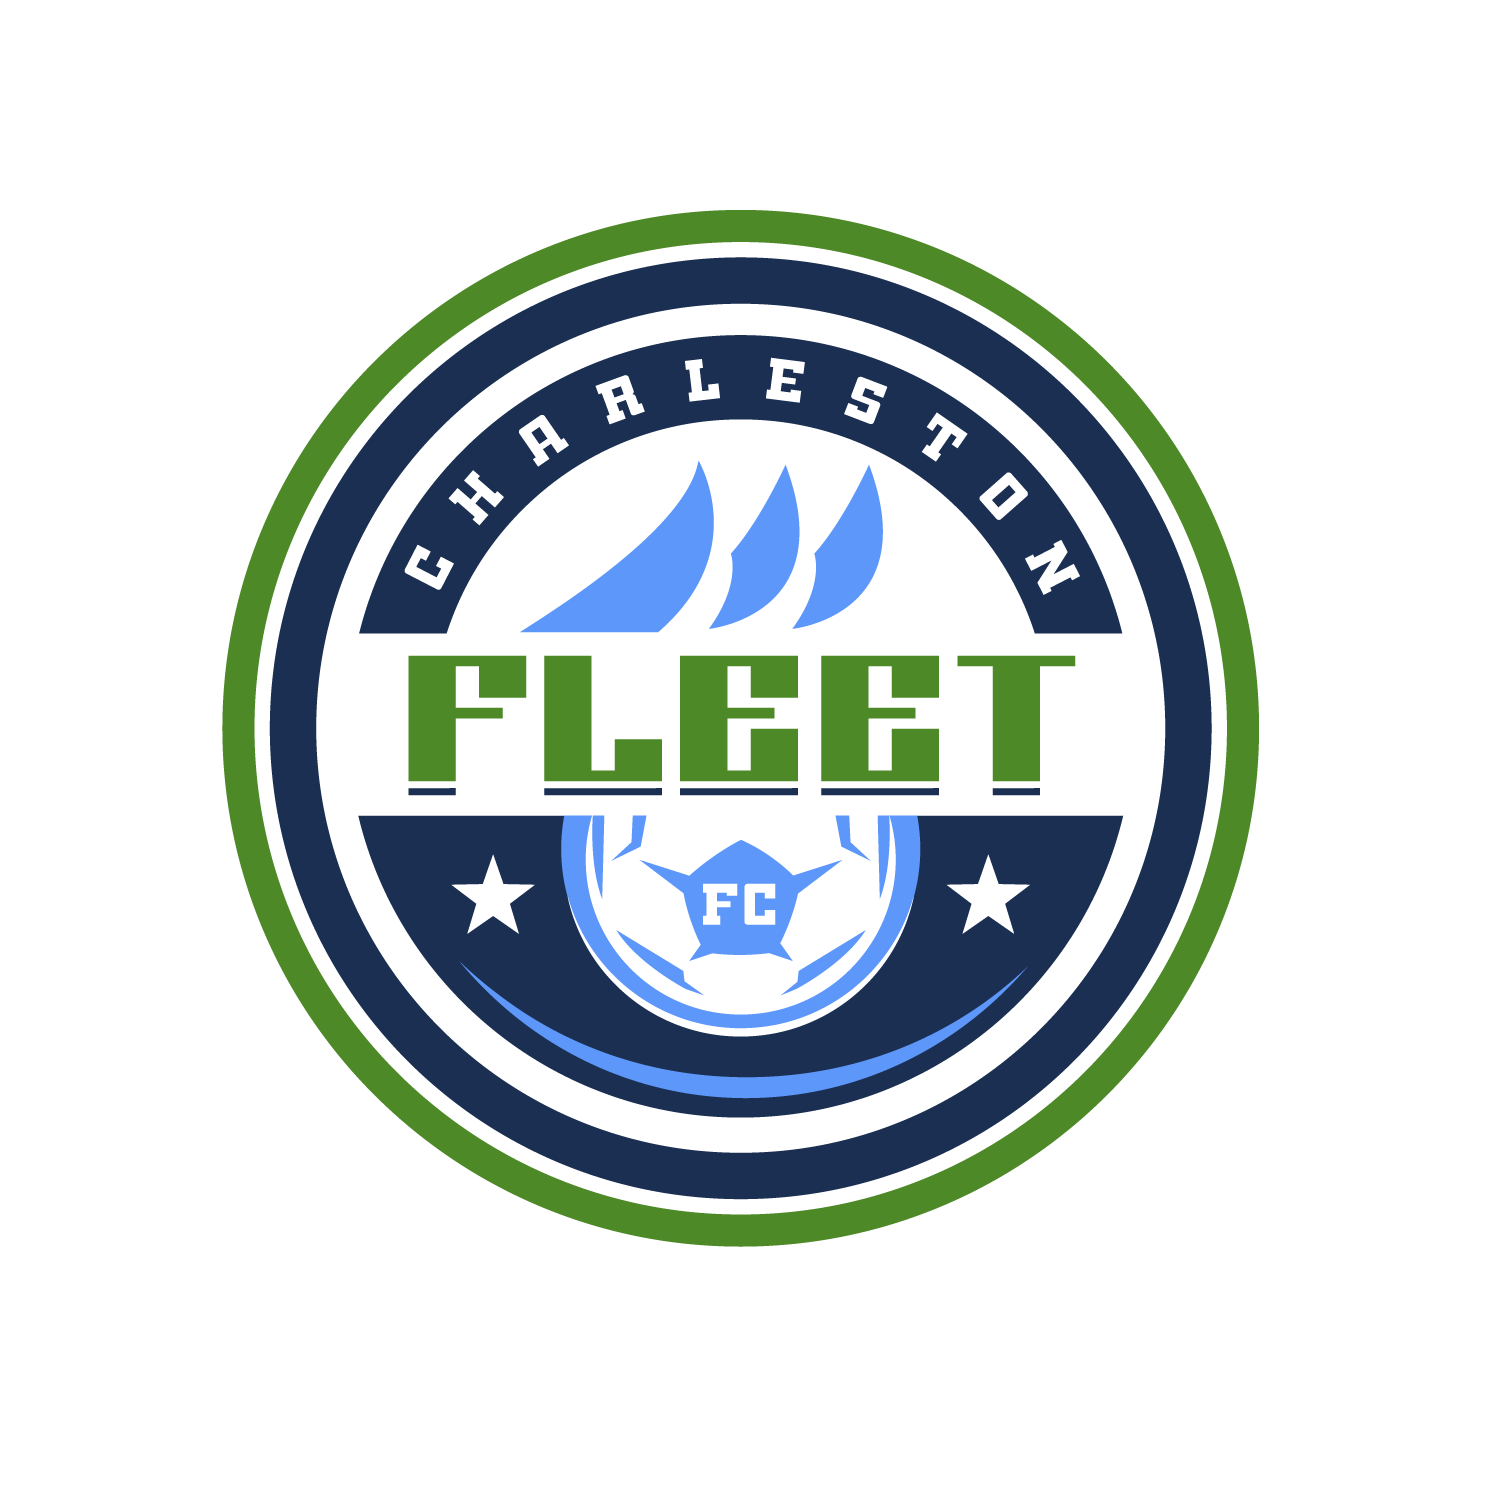 Charleston Fleet LLC